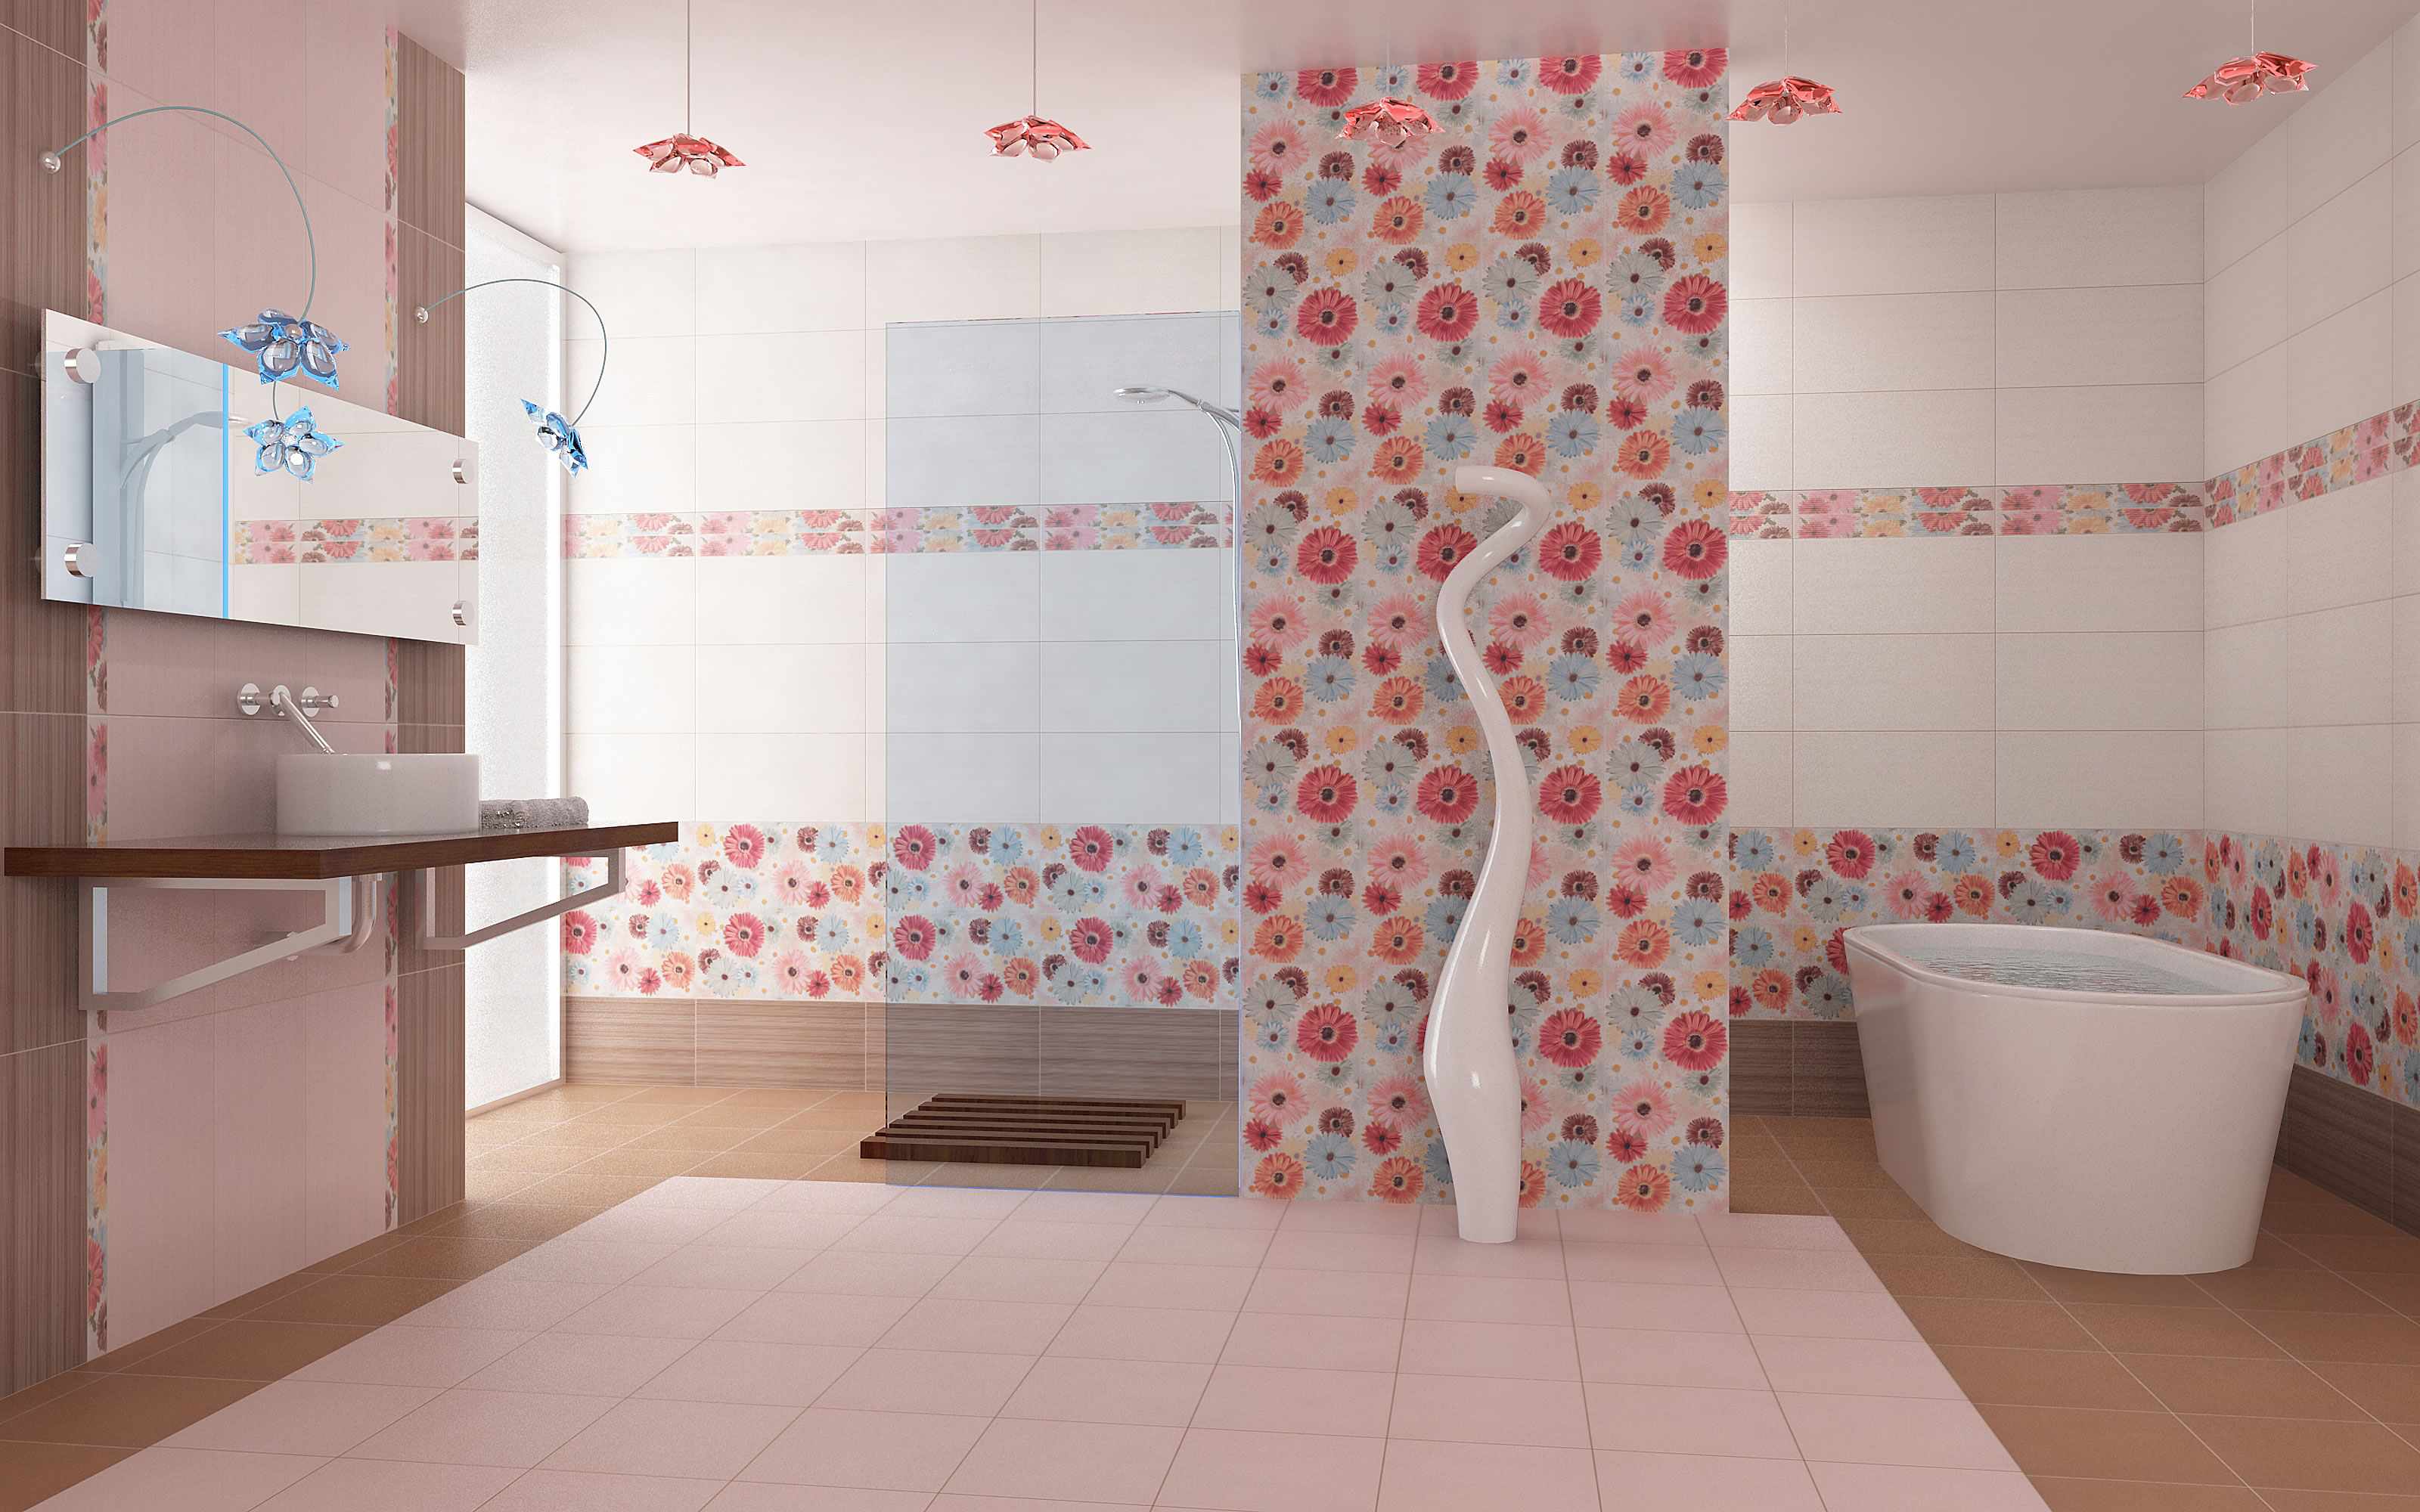 the idea of ​​a bright tiled bathroom decor